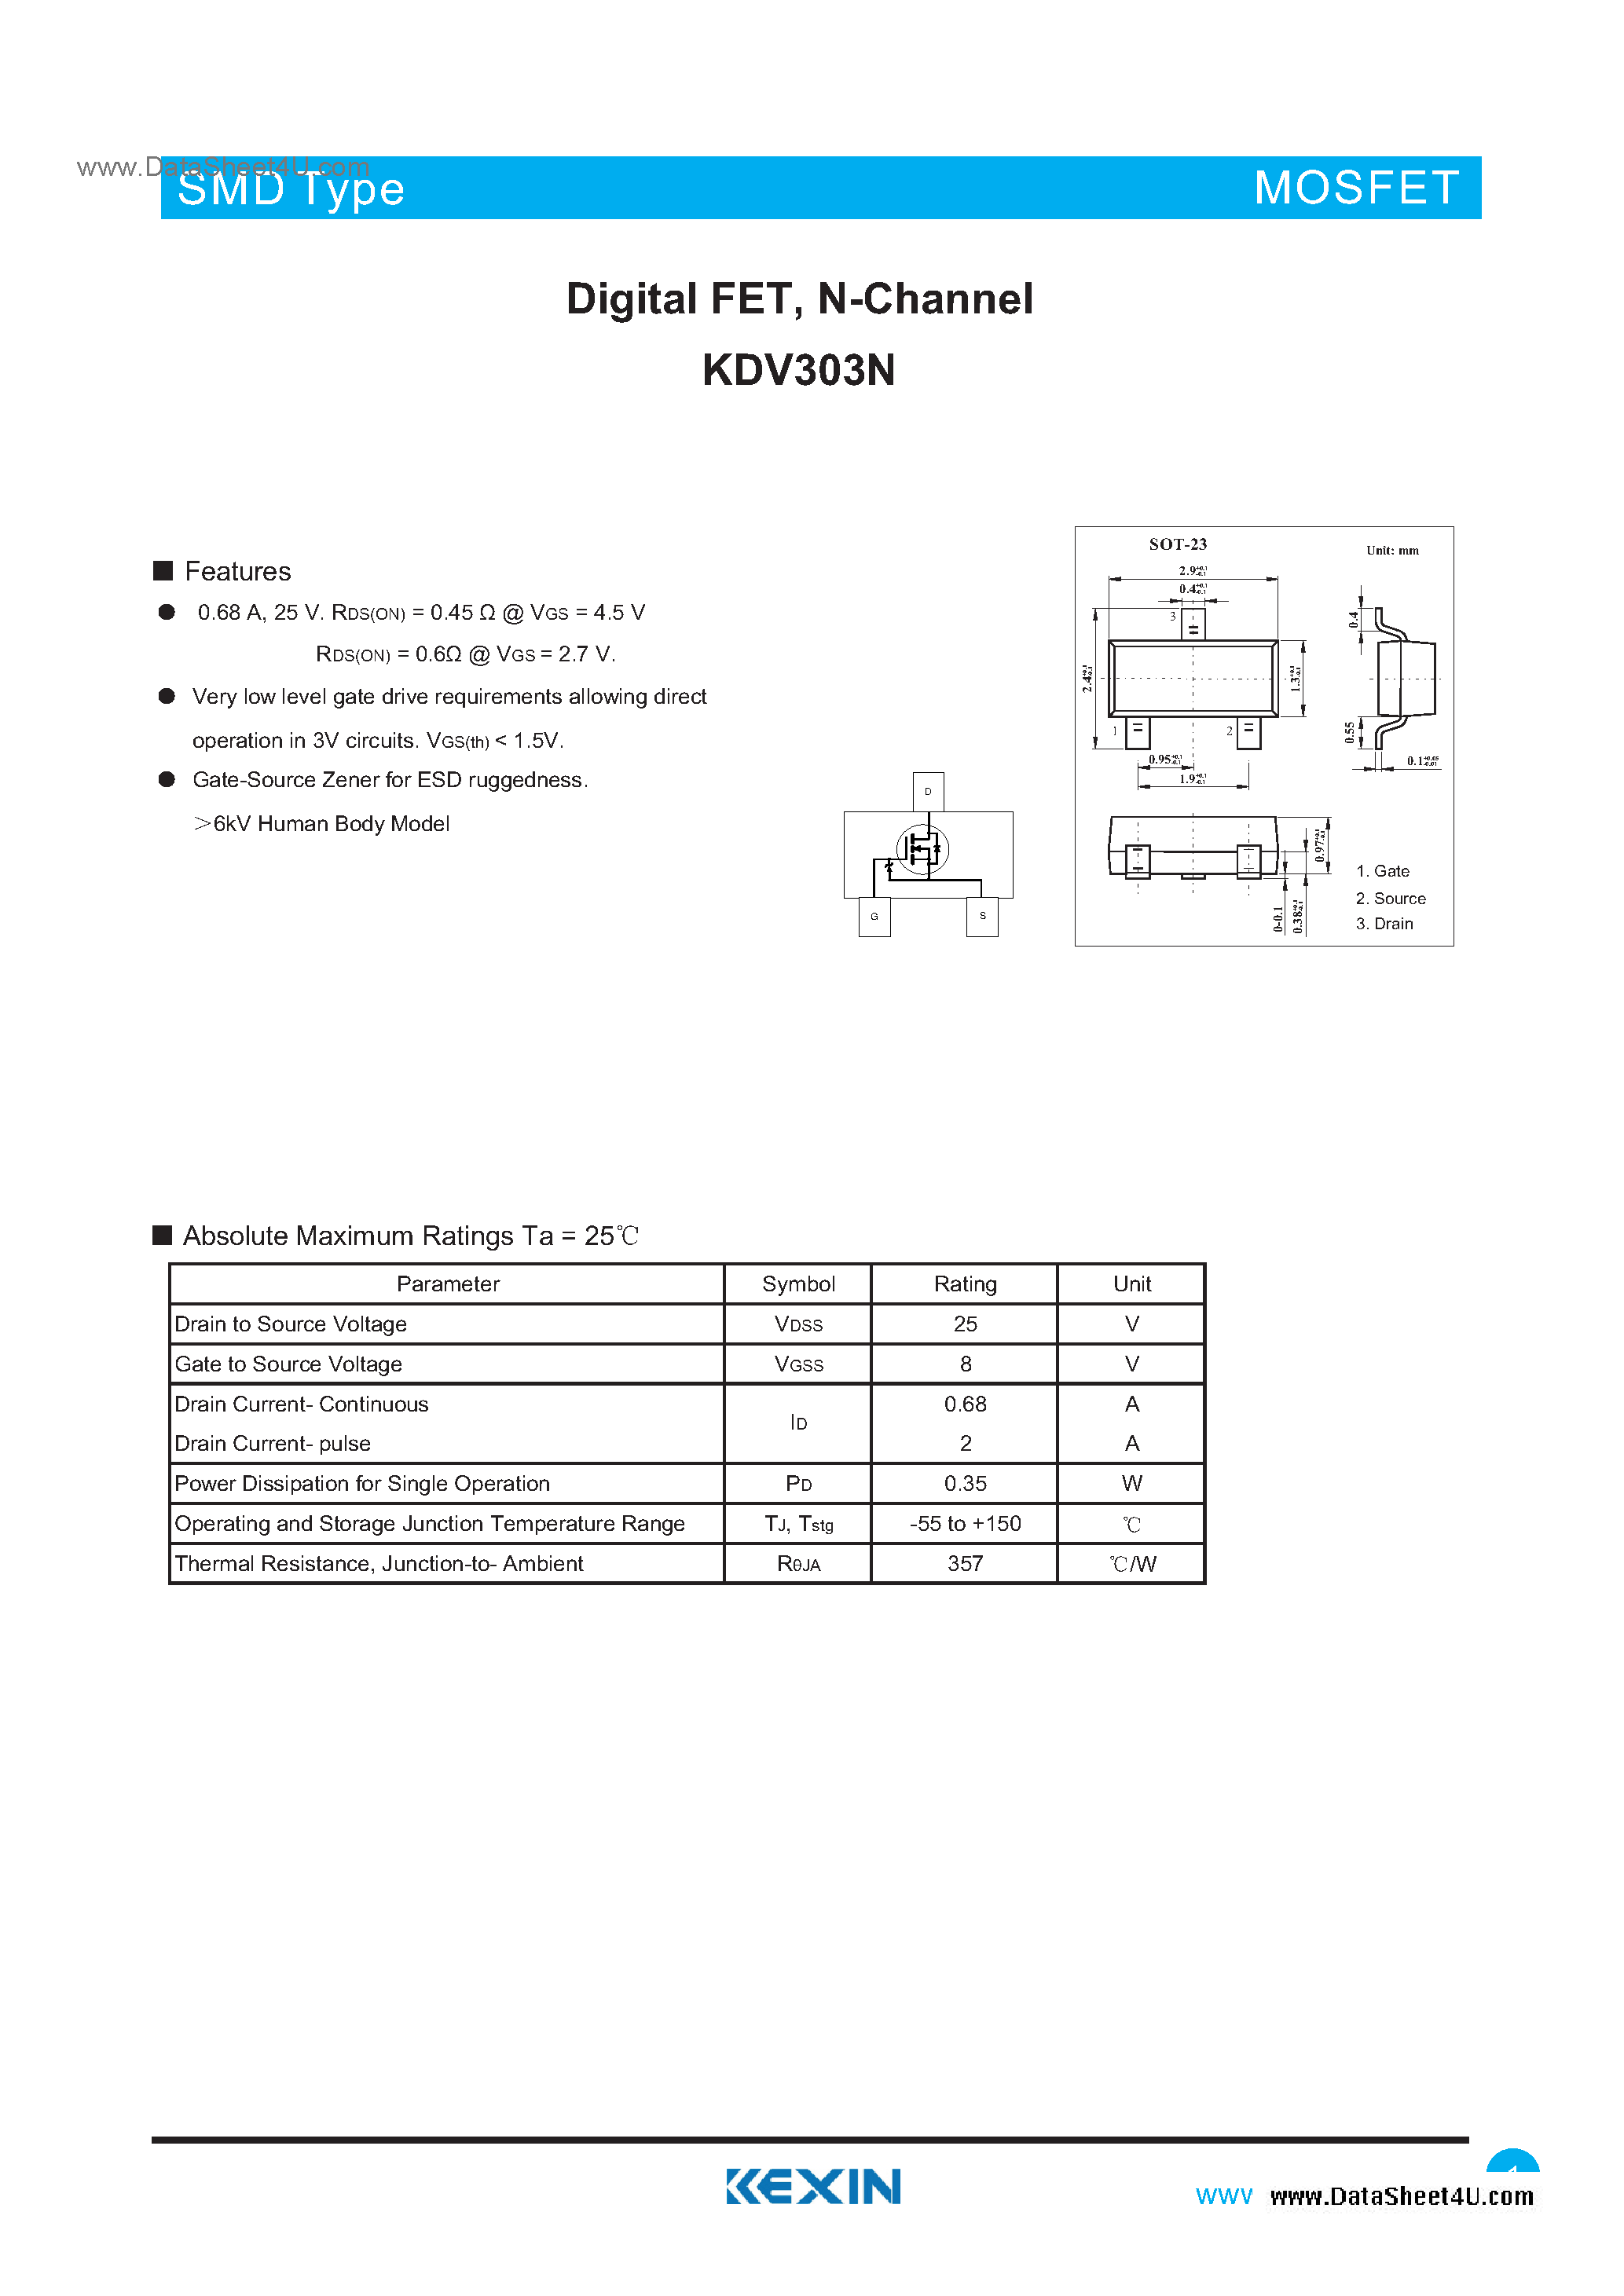 Datasheet KDV303N - Digital FET page 1